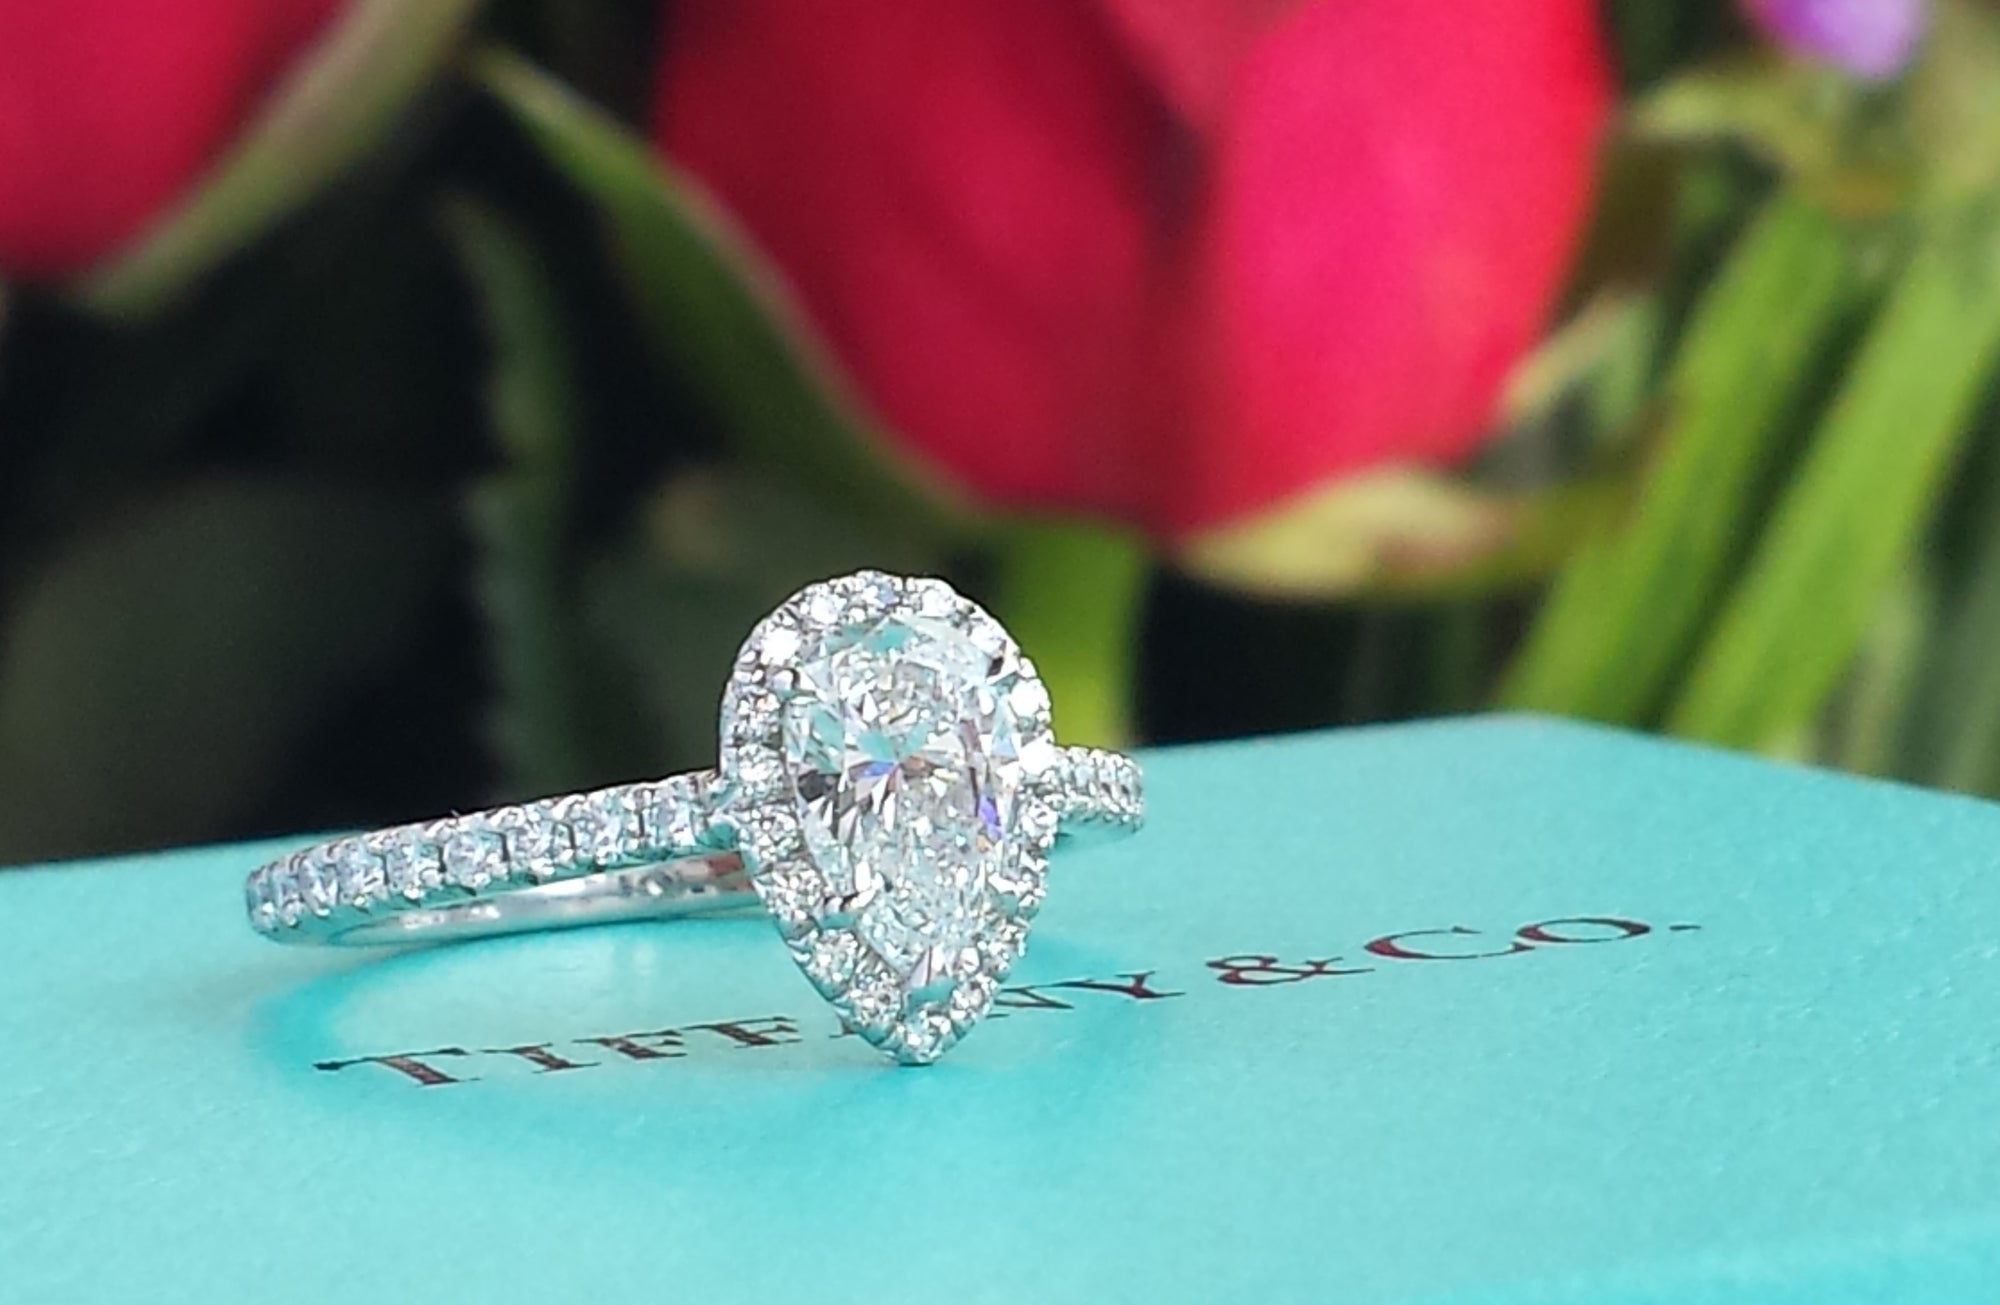 Tiffany & Co. 0.58ct E/VS1 Triple-X Pear Shaped Soleste Diamond Engagement Ring on Tiffany Blue Box